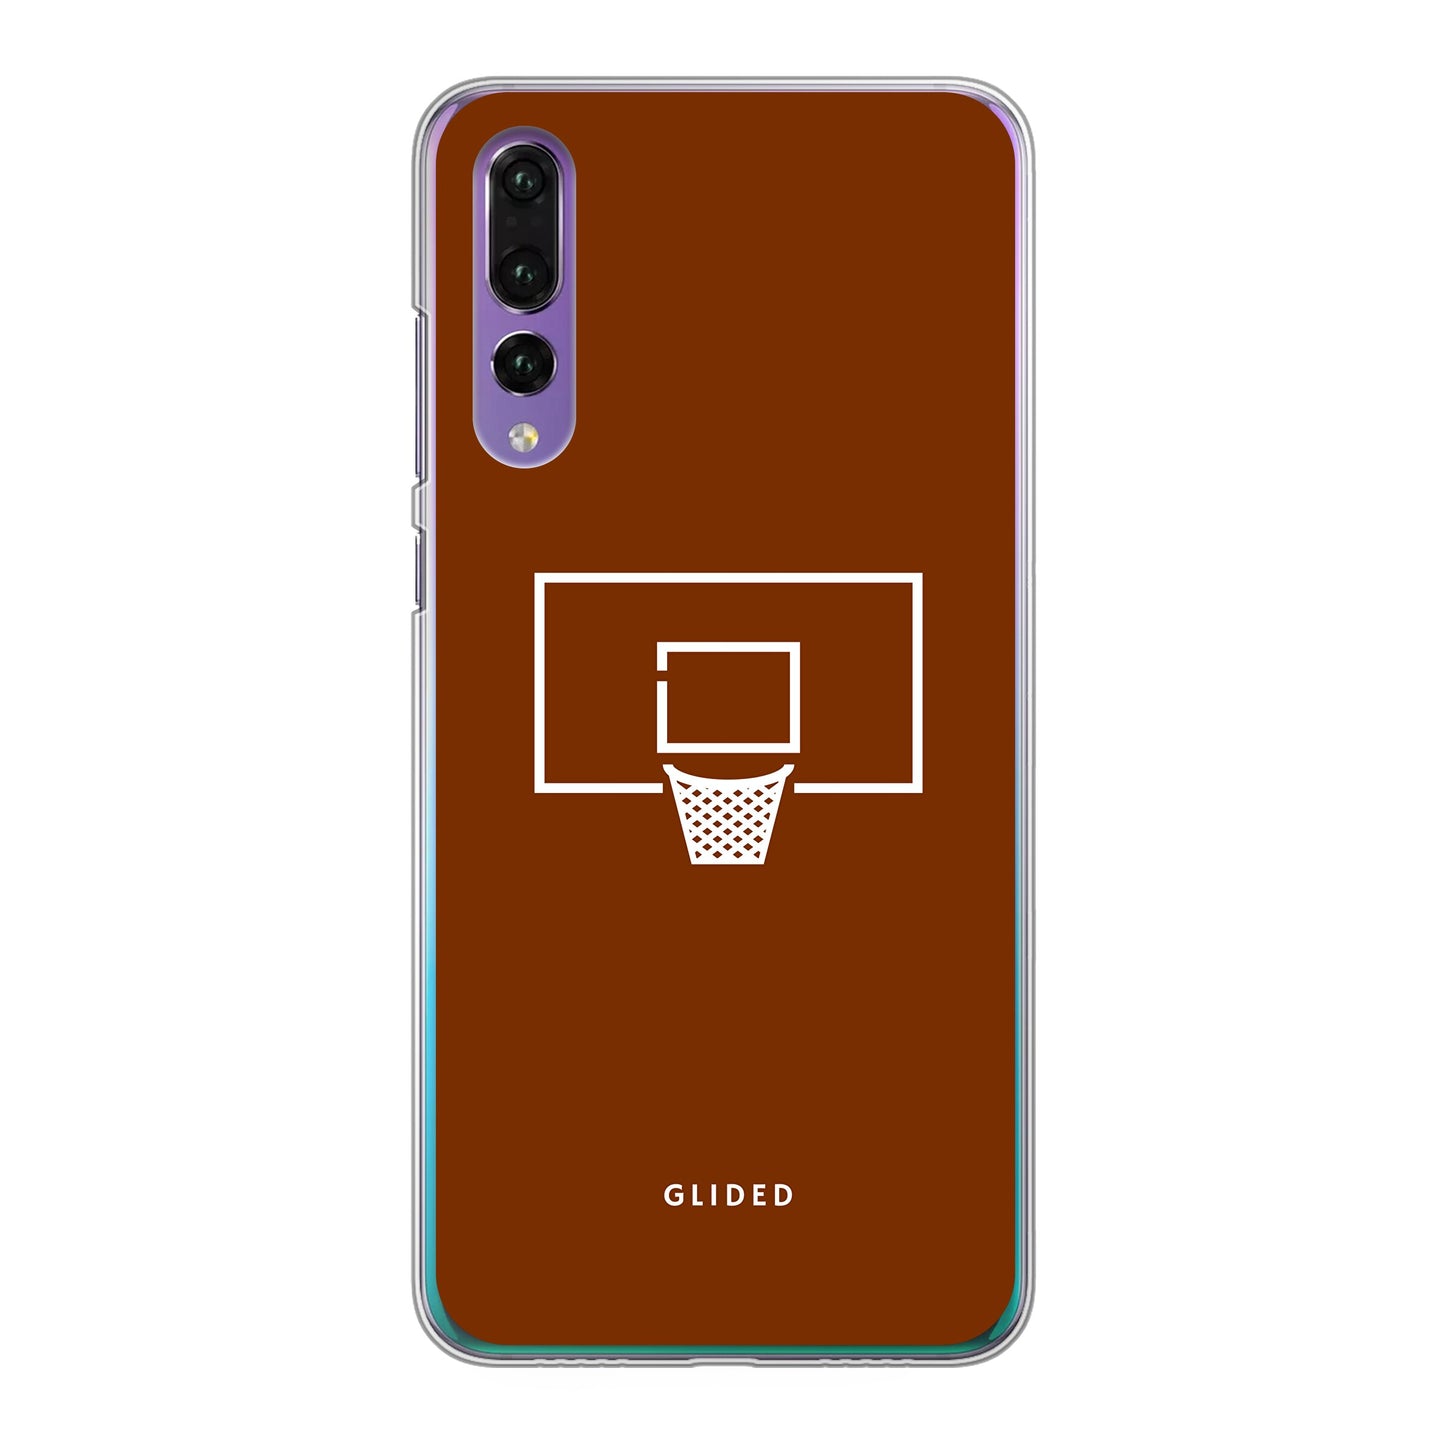 Basket Blaze - Huawei P30 Handyhülle Hard Case